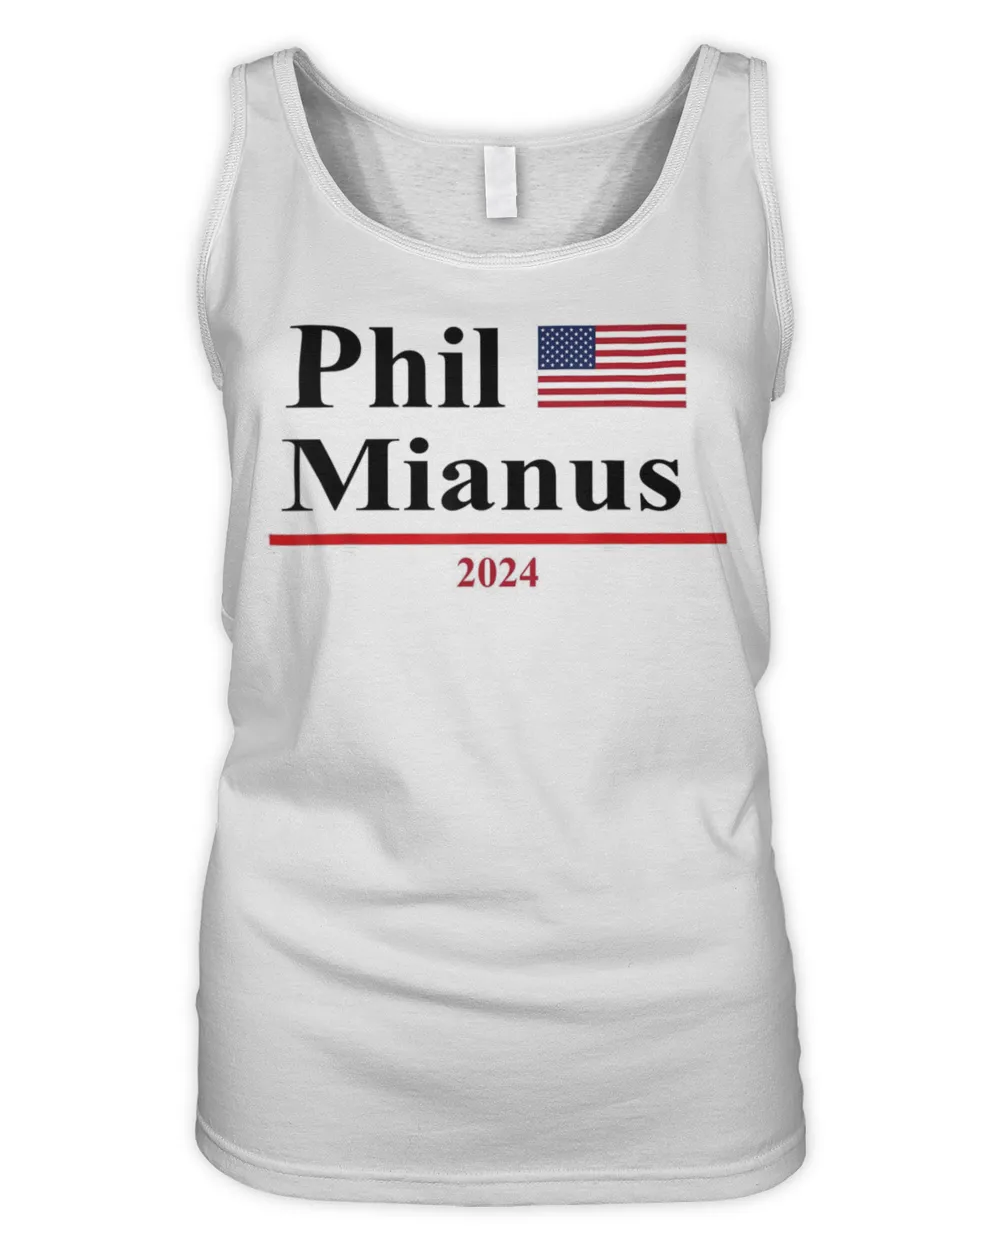 Phil Mianus Presidential Election 2024 Parody Innuendo T-Shirt